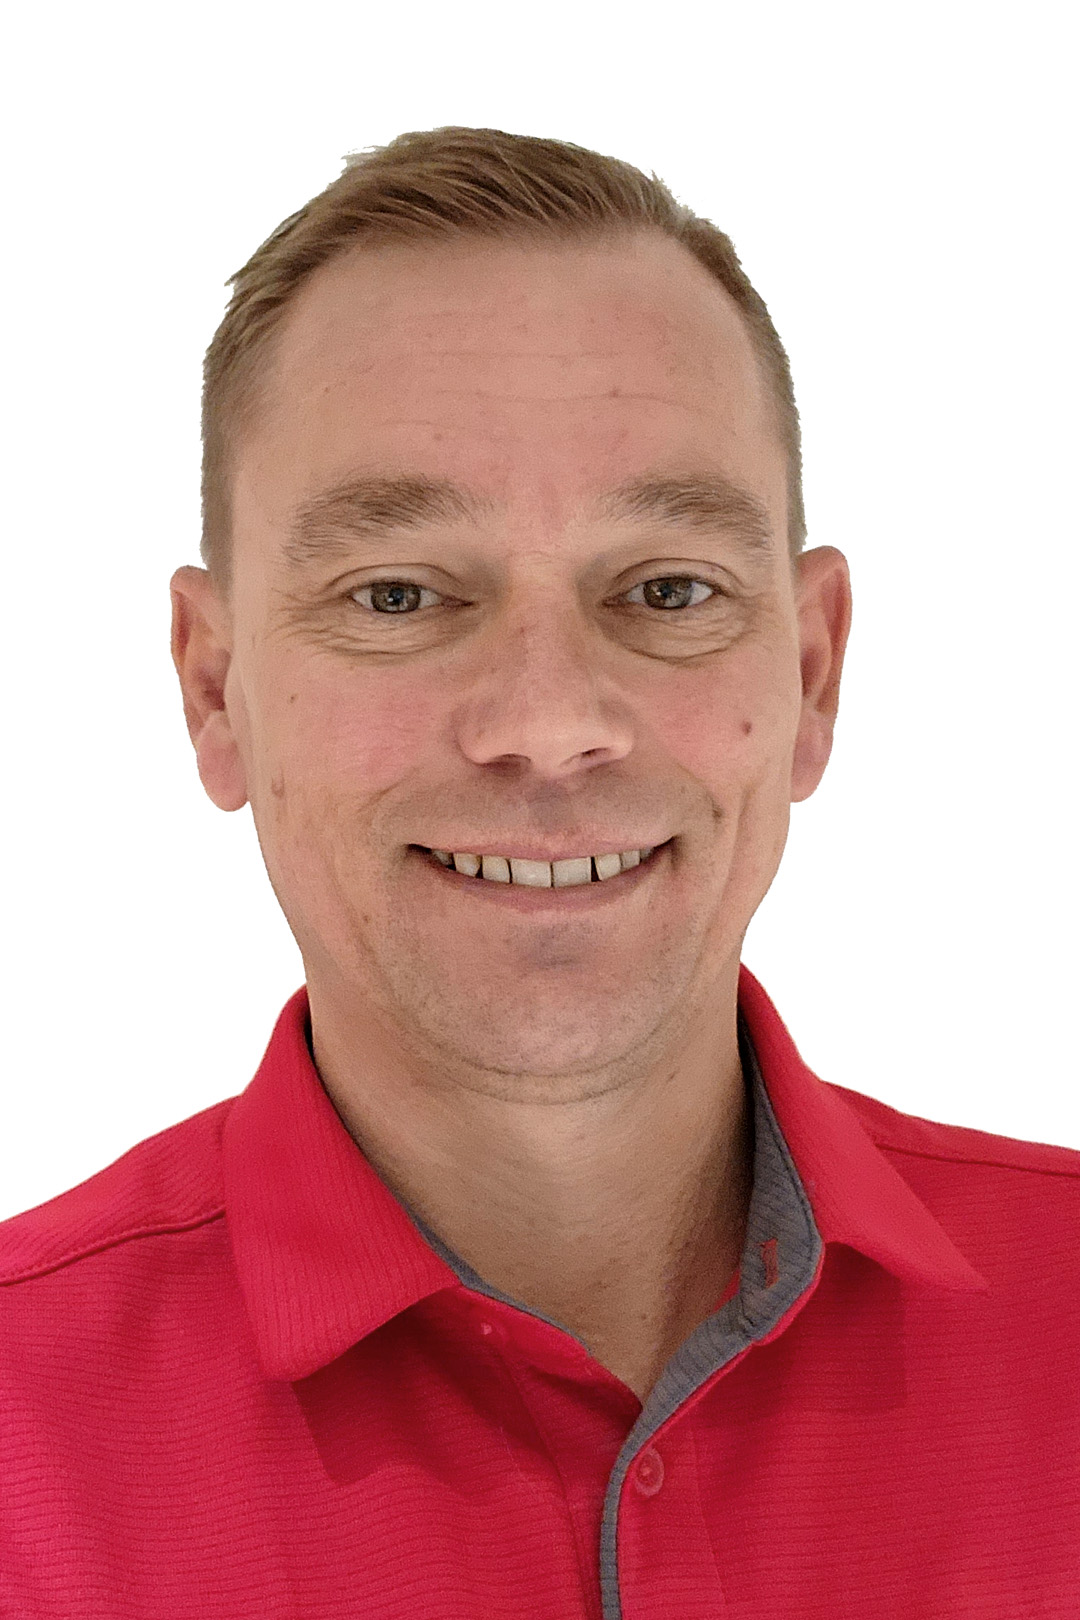 Michael Hansen